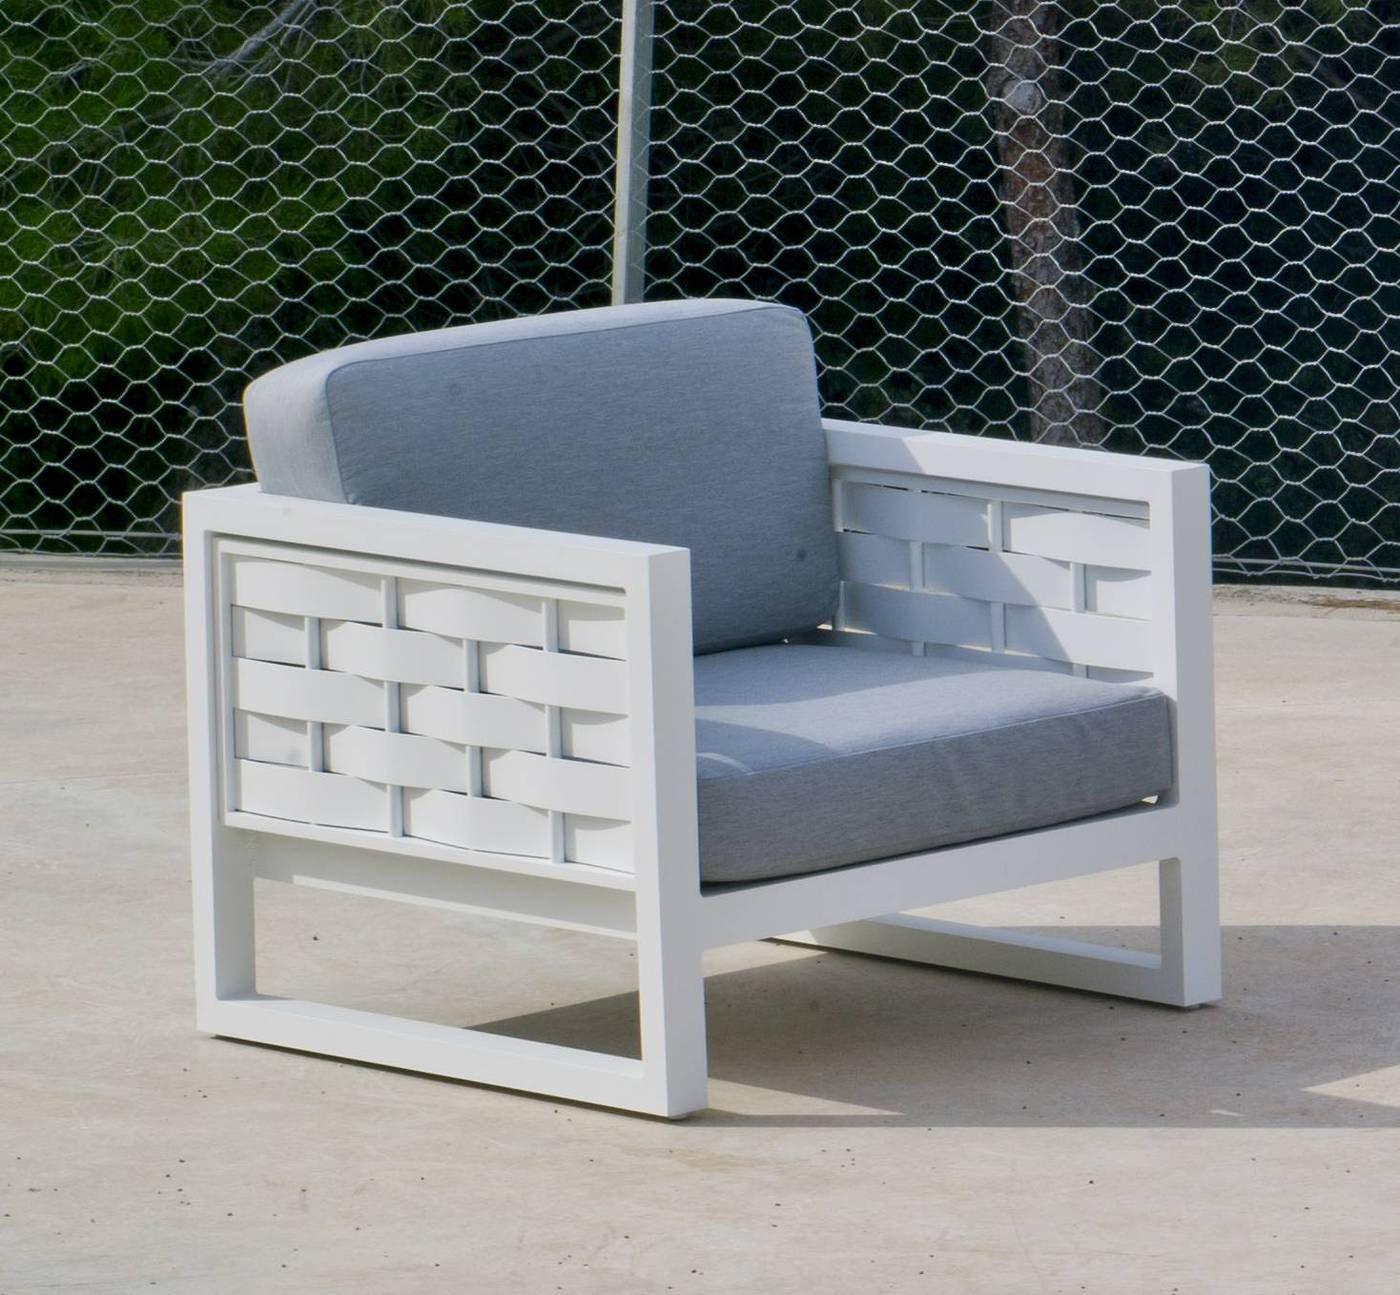 Lujoso sillón con cojines gran confort desenfundables. Estructura 100% de aluminio en color blanco, antracita o champagne.